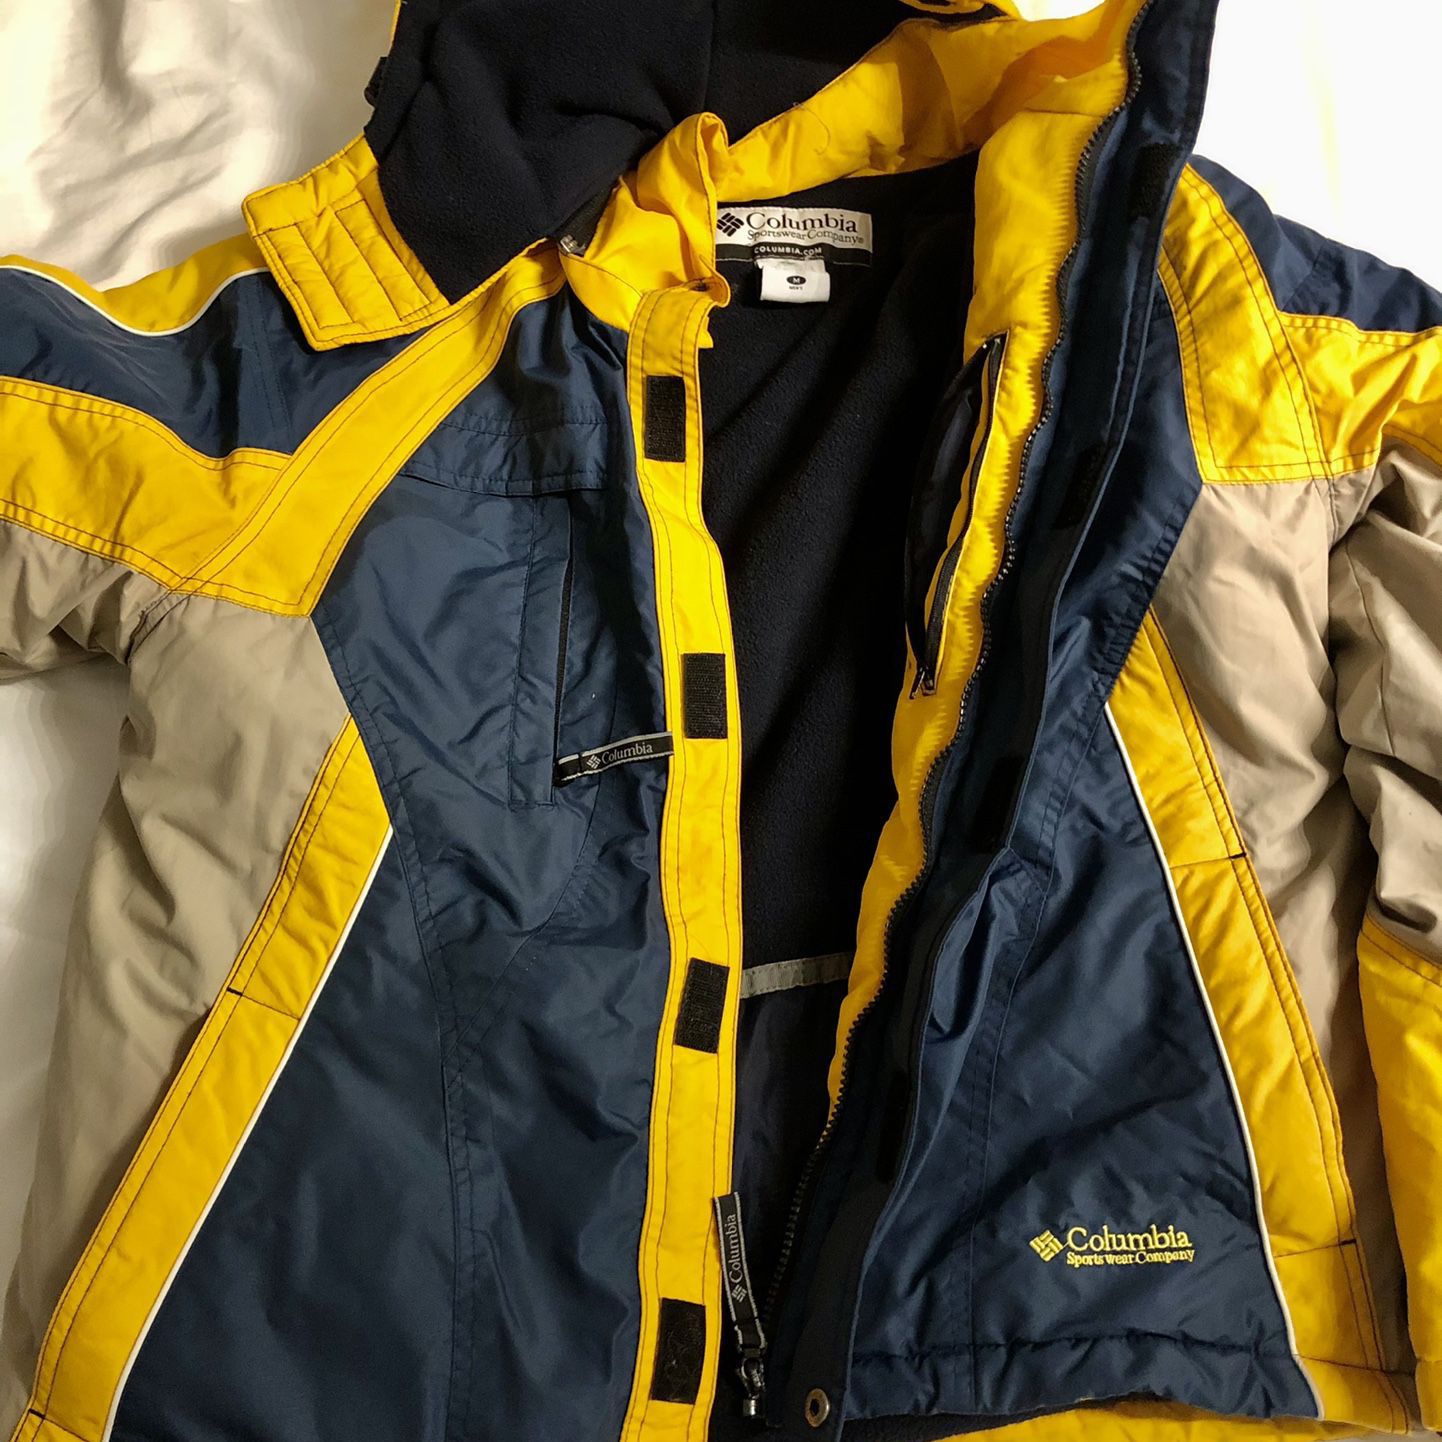 Columbia Sportswear Yellow Jacket